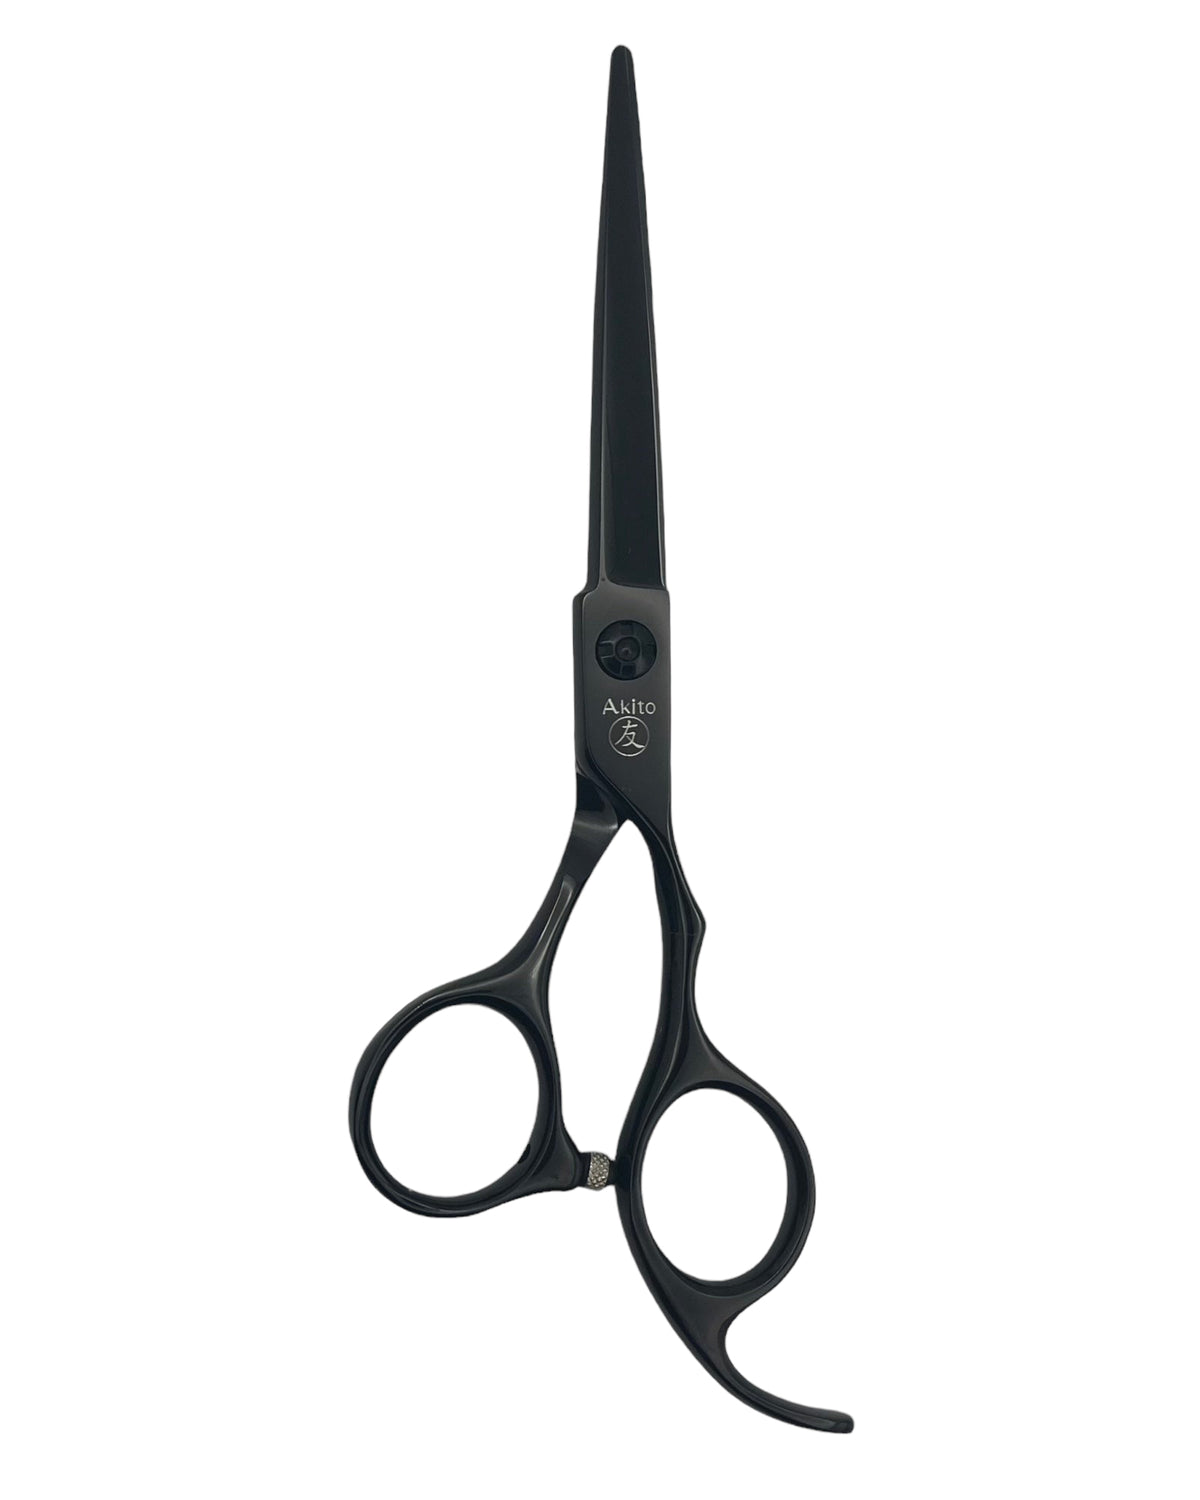 F-2 Black Hairdressing Scissors 6.0 inch